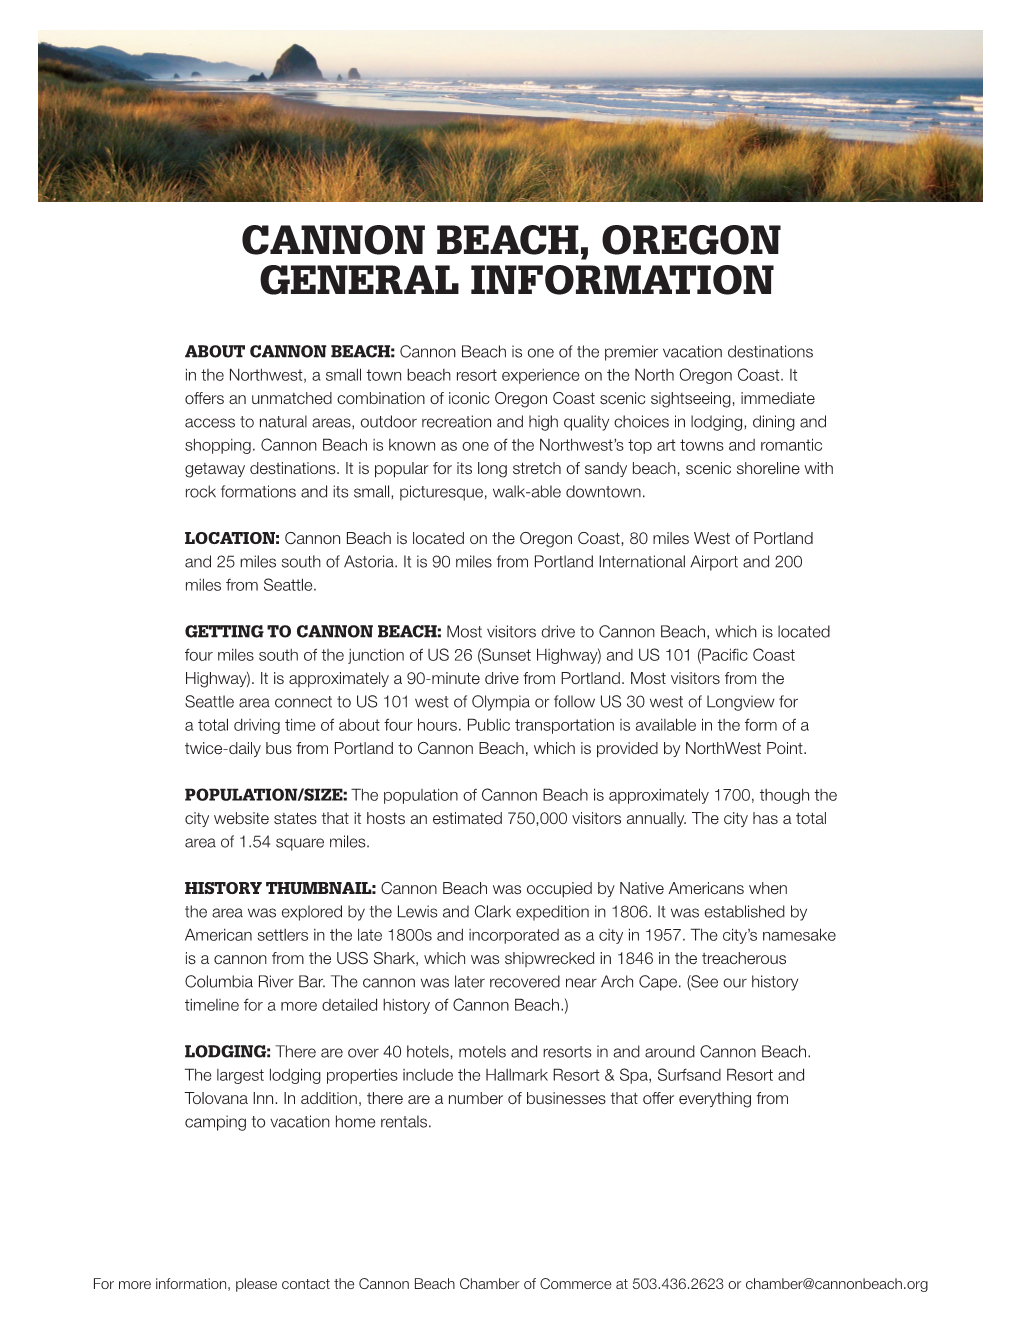 Cannon Beach, Oregon General Information